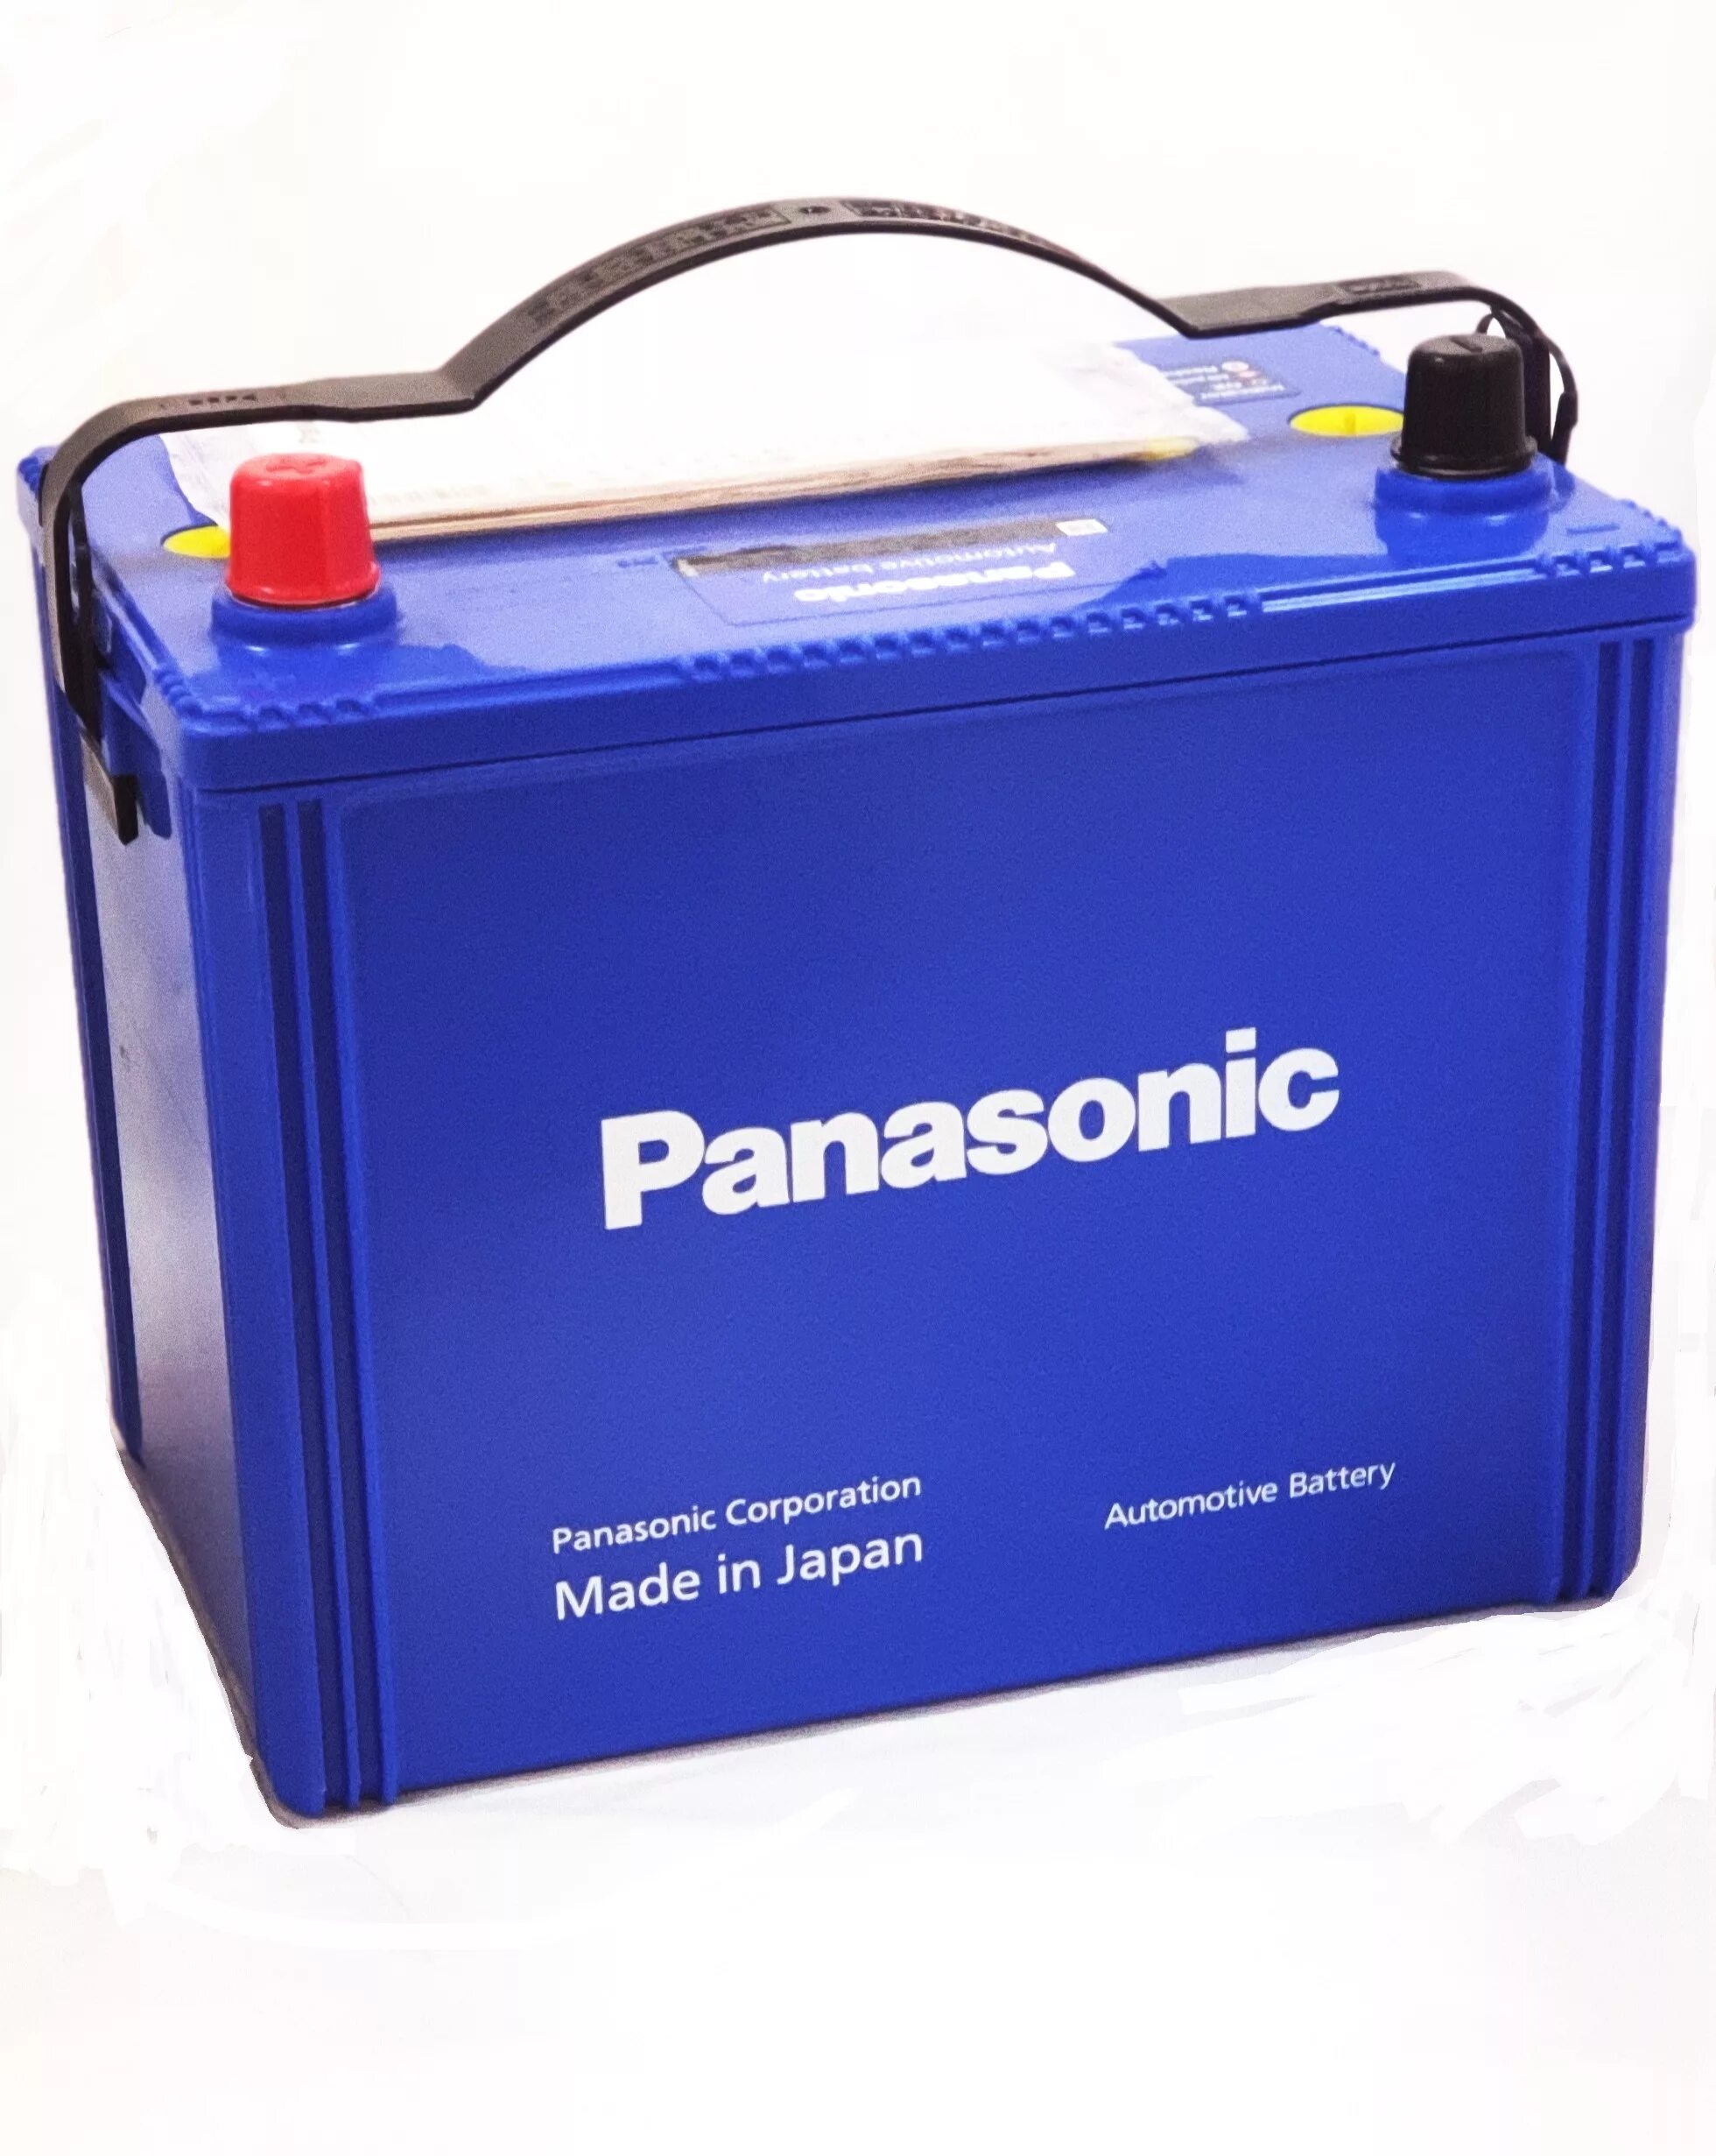 Panasonic batteries. Аккумулятор Панасоник для авто 60. D80d26lmf Panasonic автомобильный аккумулятор. Аккумулятор автомобильный Панасоник 65. Аккумулятор Panasonic n-80d26r-ft.